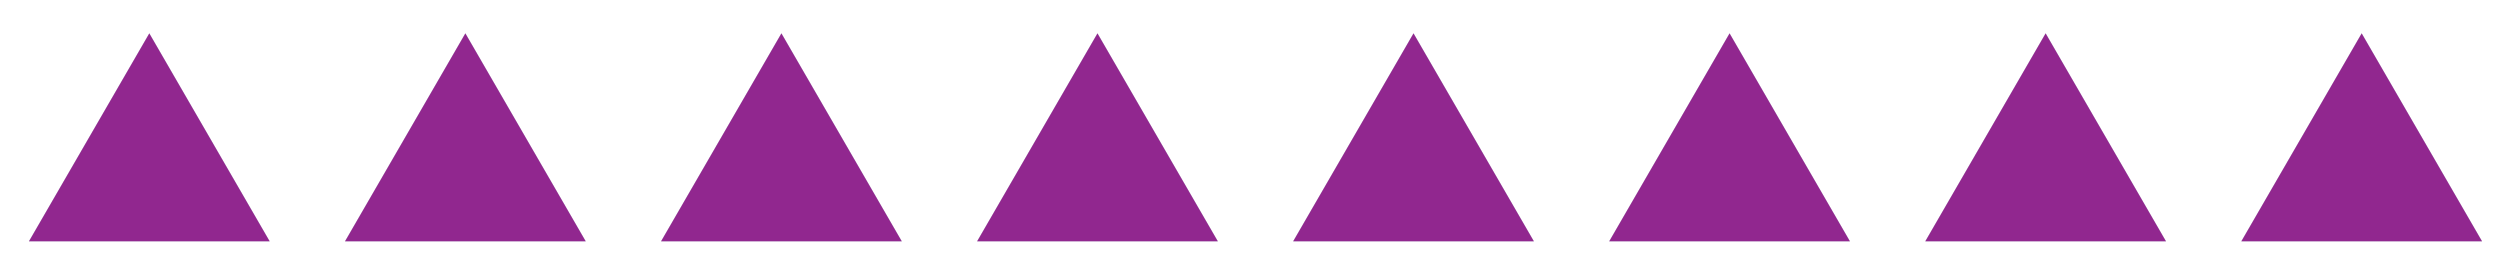 Free line breaks triangles. Triangular clipart lavender